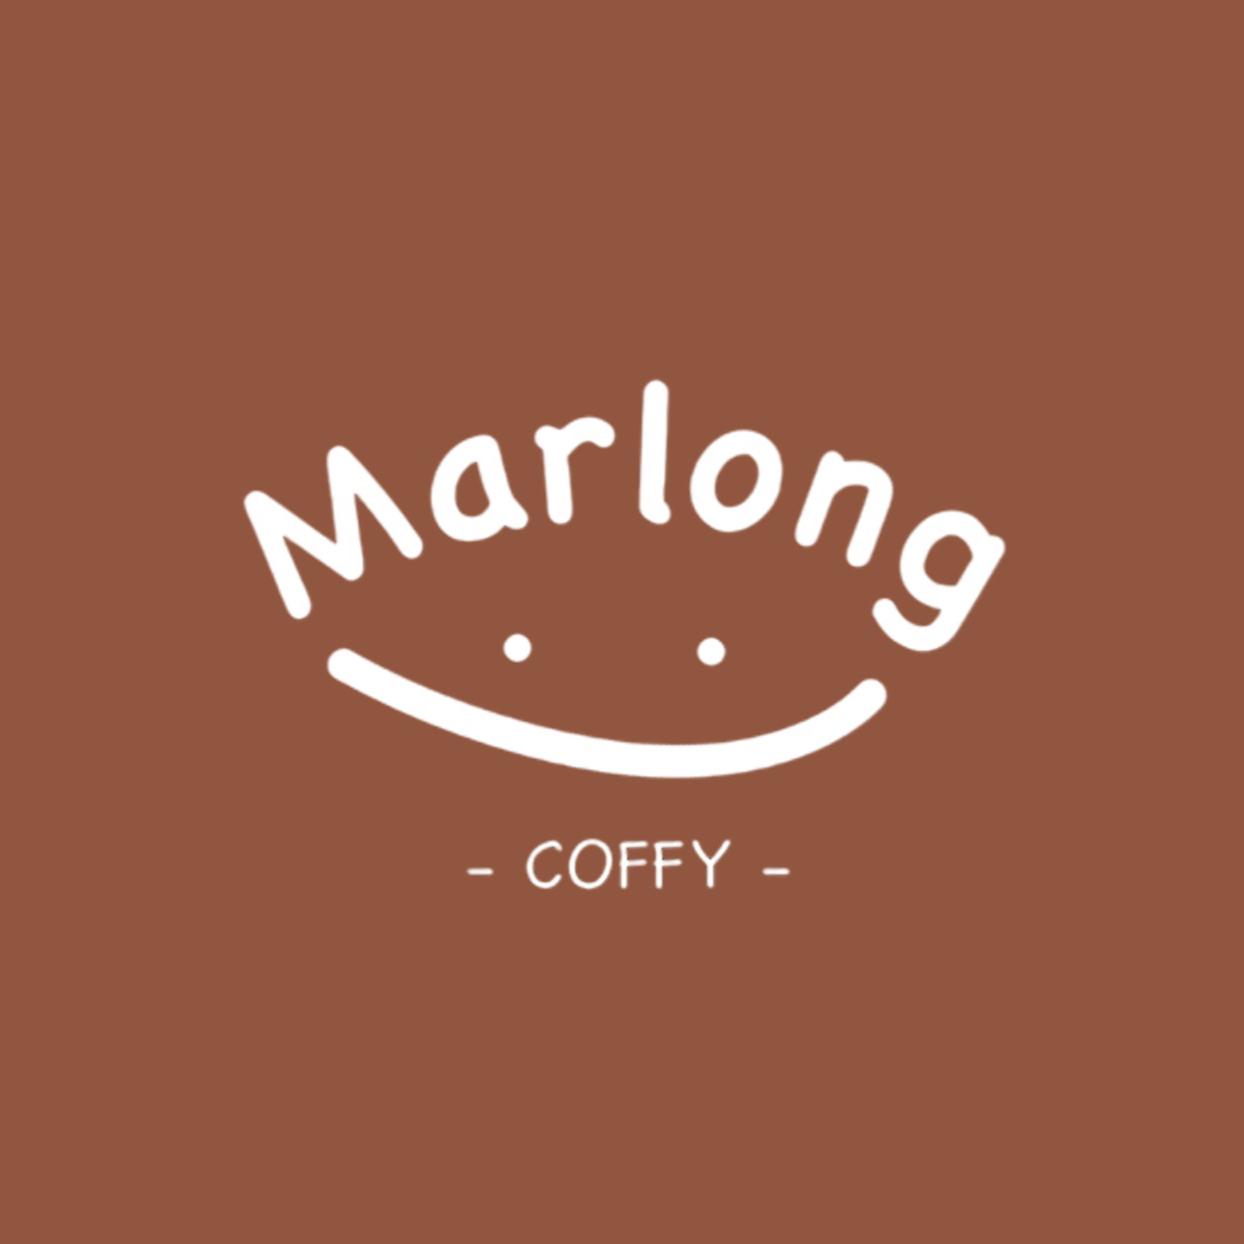 MARLONGCOFFY ☕️'s images